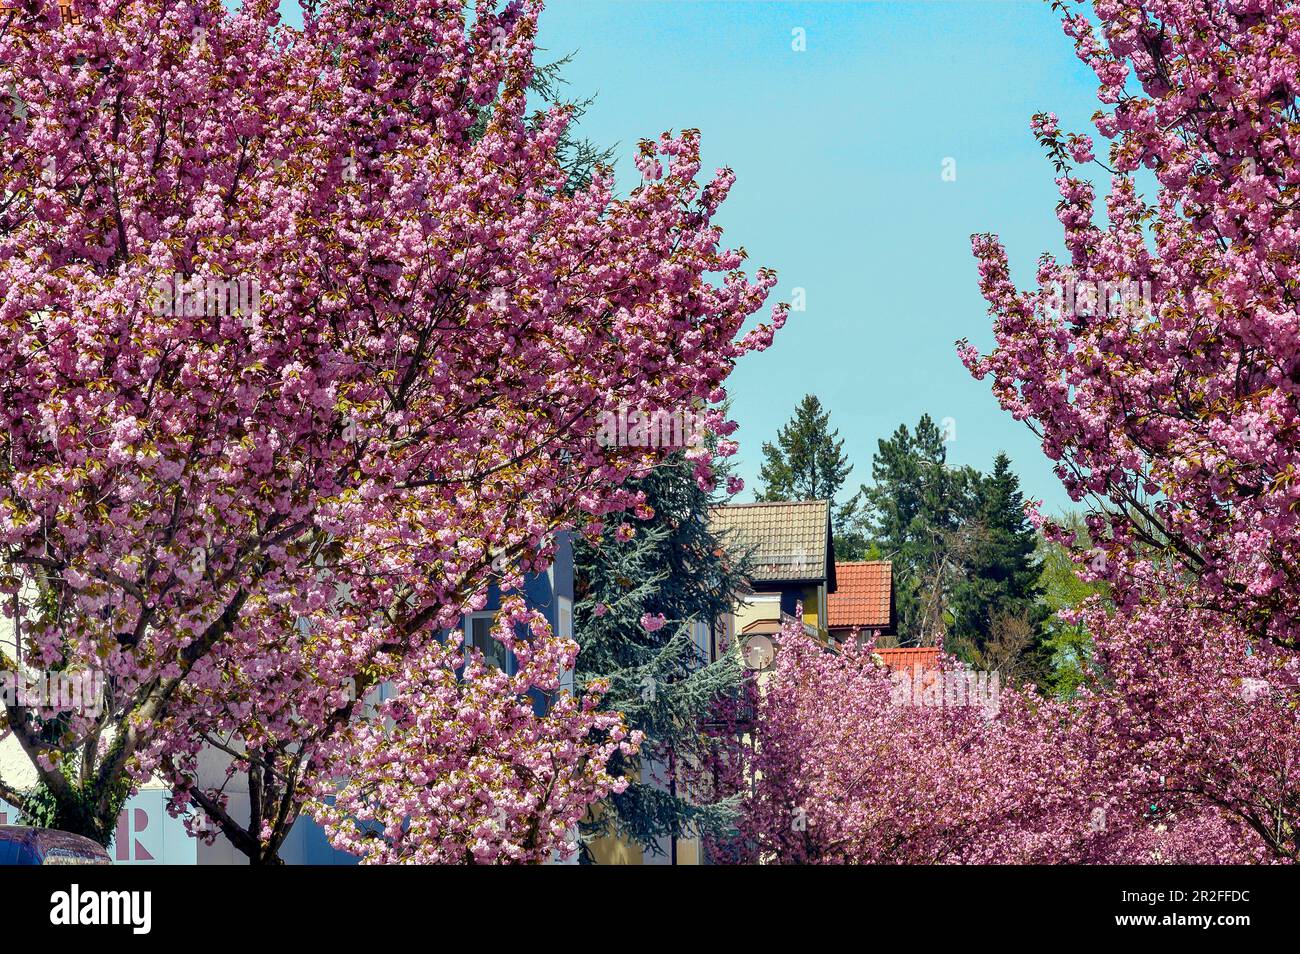 Almond blossom (Prunus dulcis), Kempten, Allgaeu, Bavaria, Germany Stock Photo